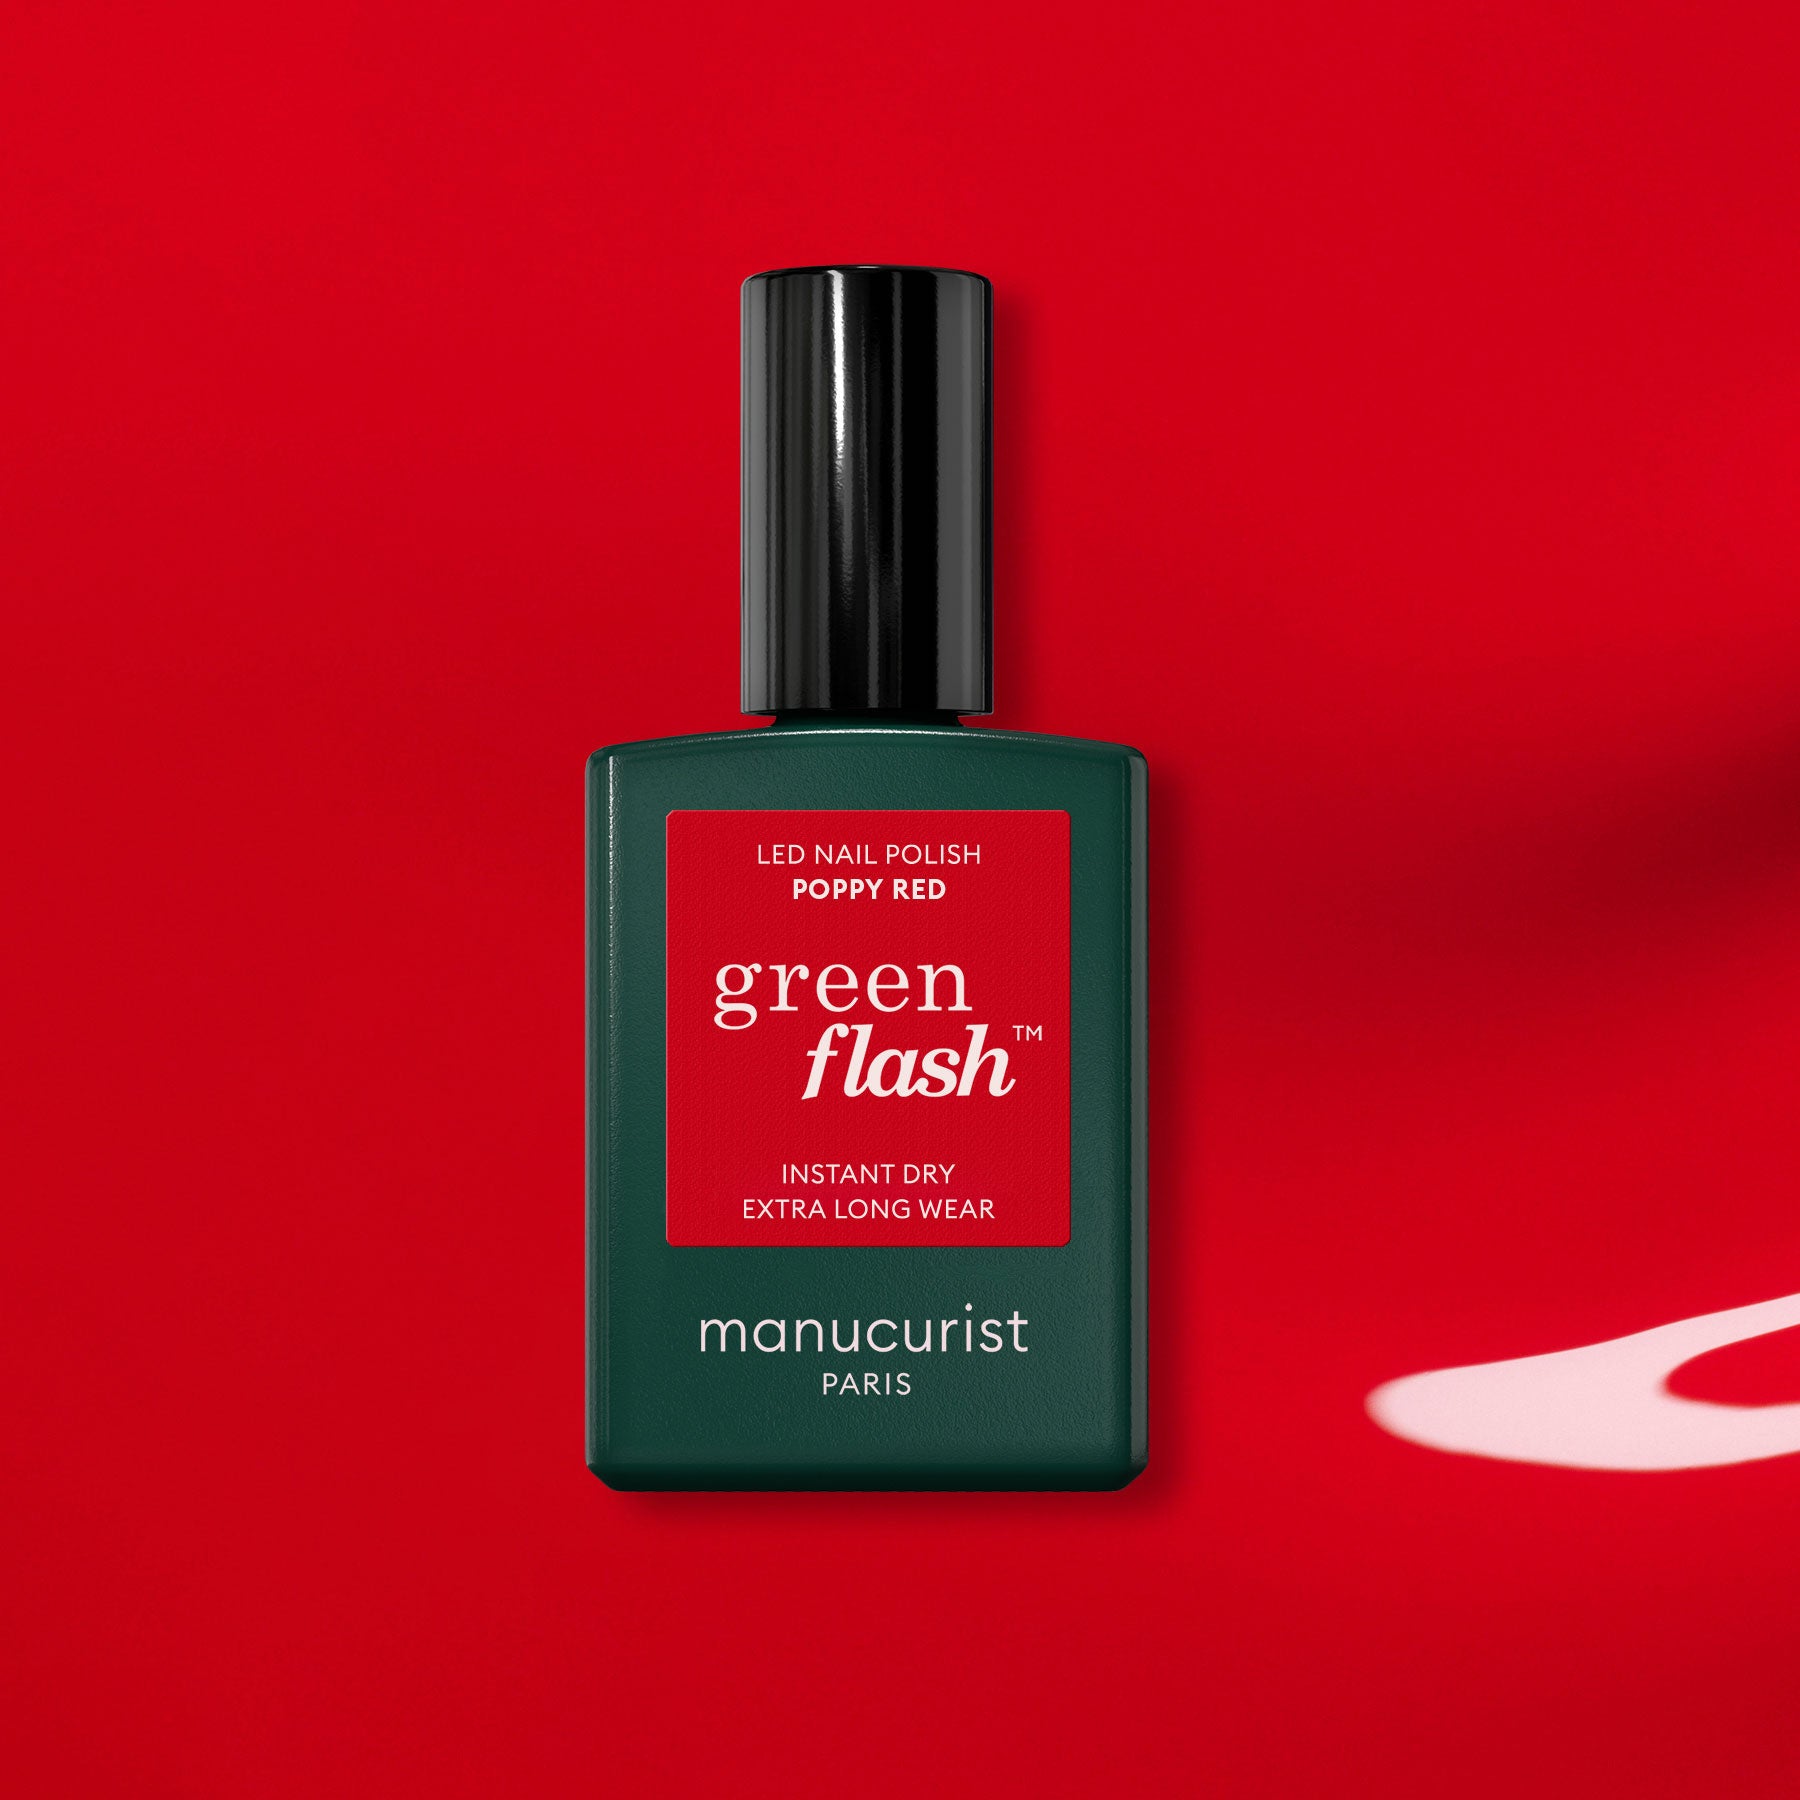 Green Flash Poppy Red - Alternative to gel polish